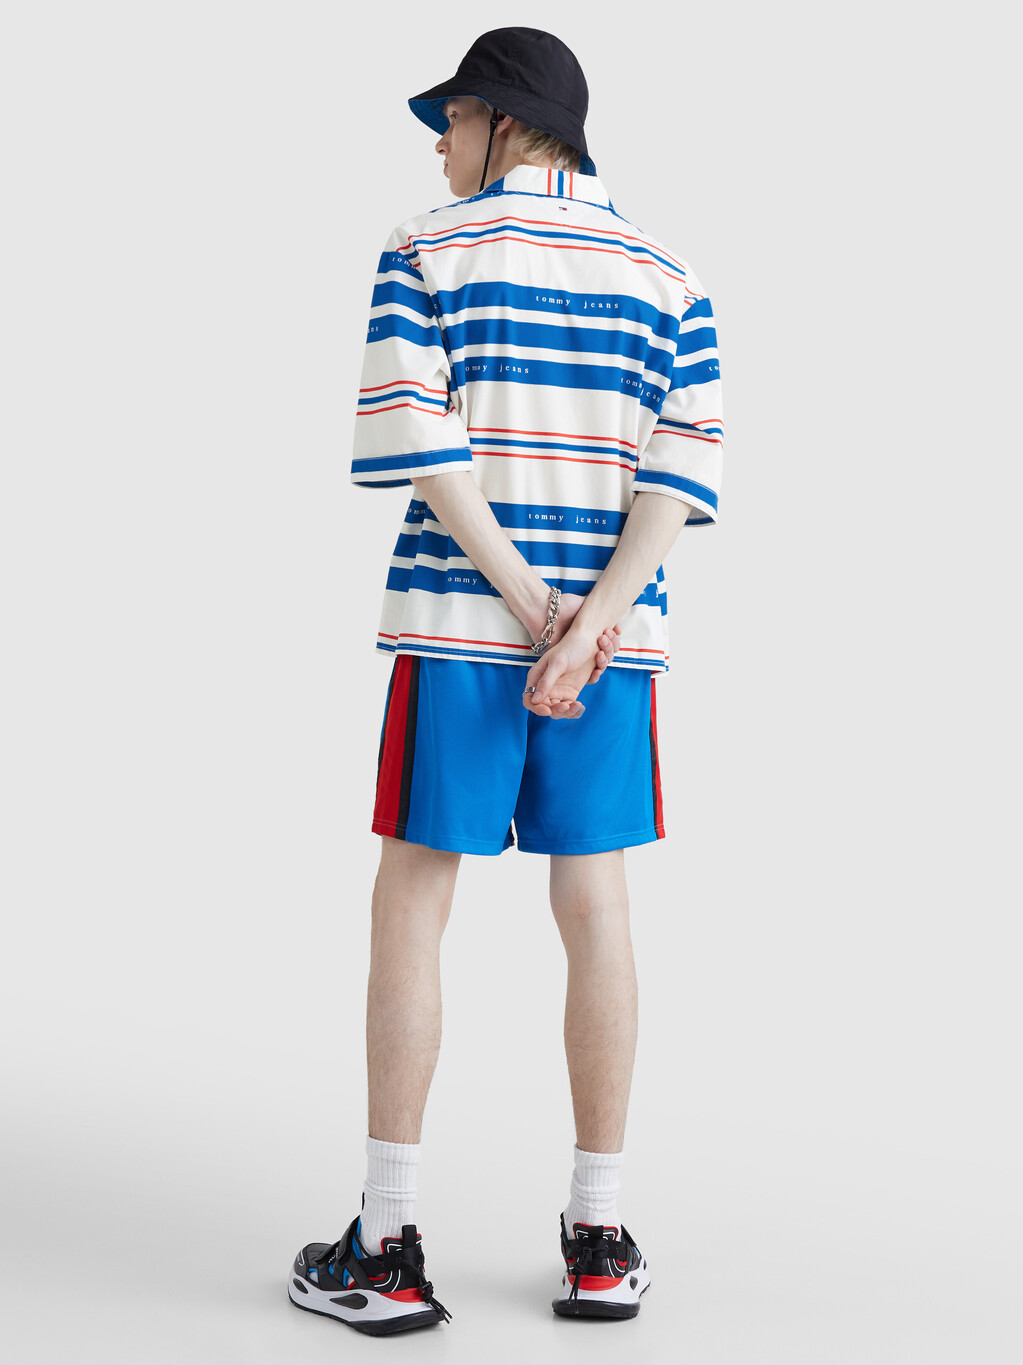 Dual Gender Mixed Stripe Bowling Shirt, Ecru, hi-res